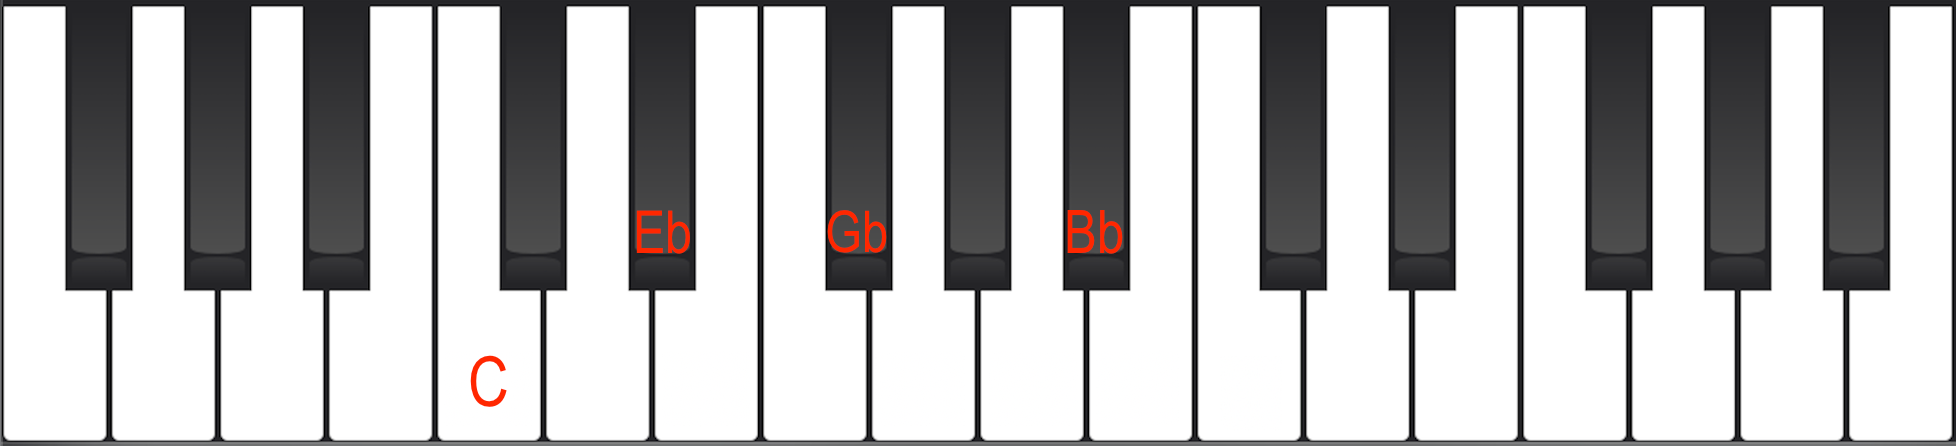 C-7b5 chord on piano